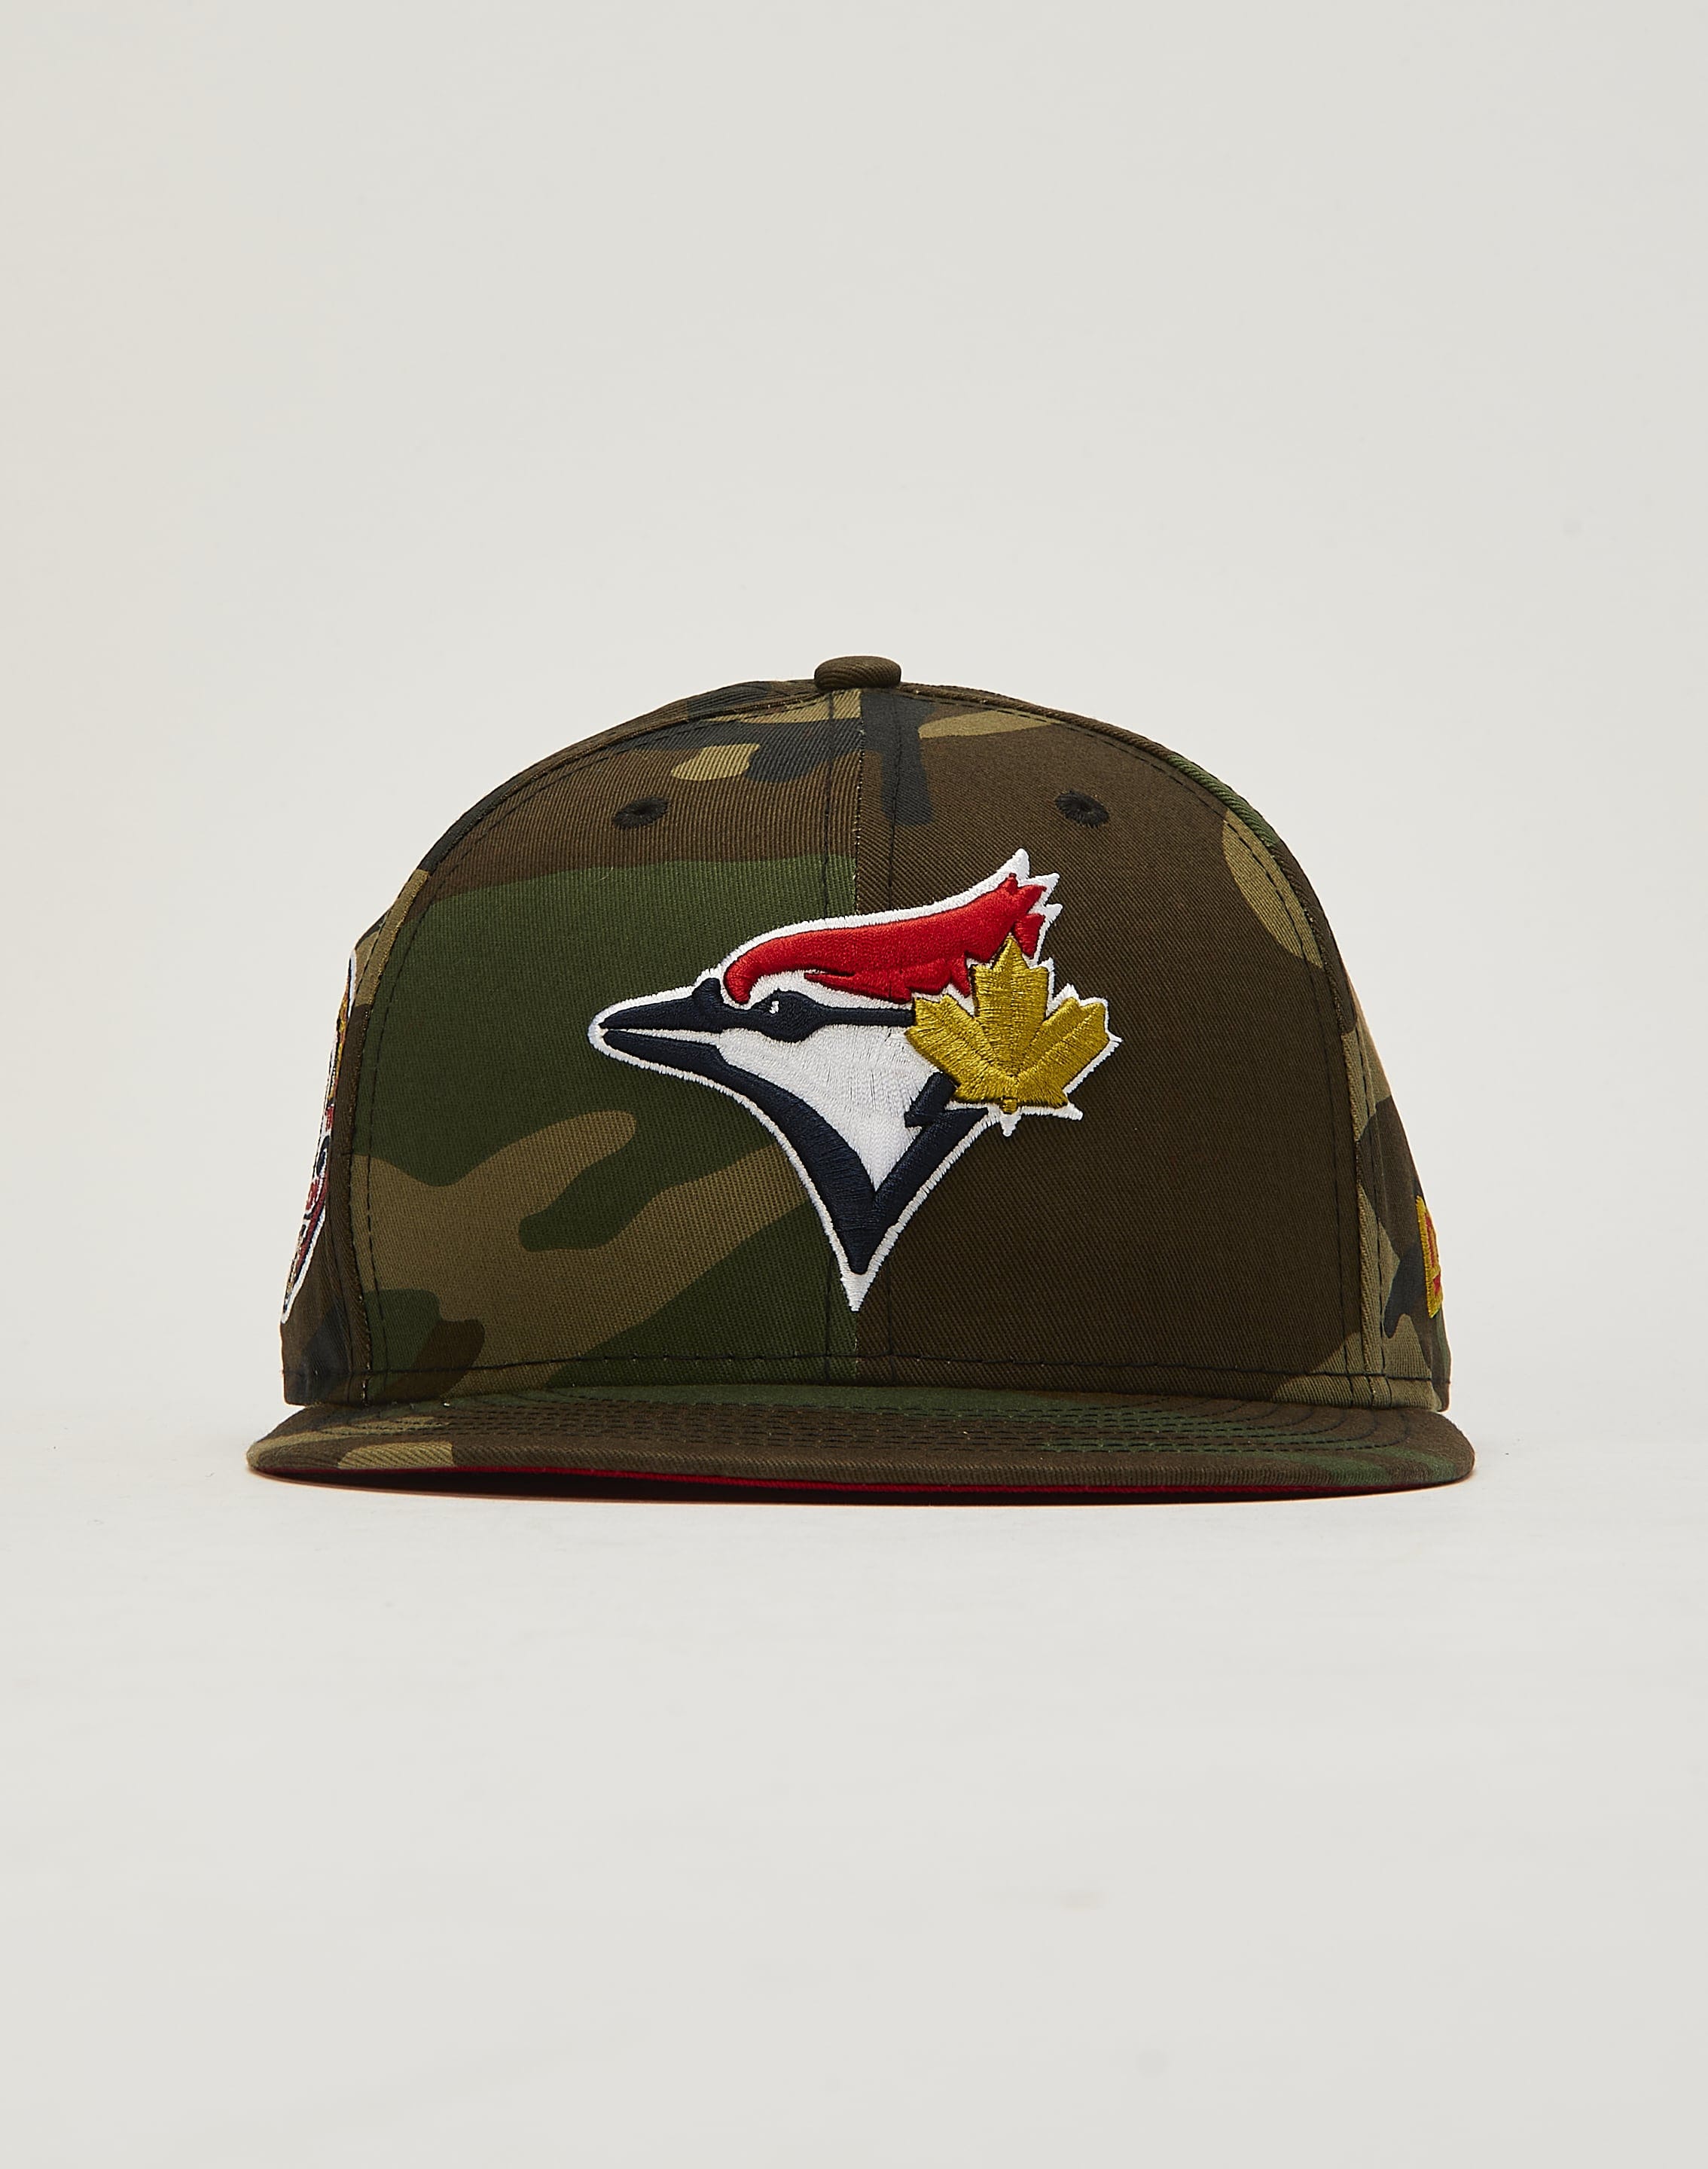 New Era, Accessories, Brand New Toronto Blue Jays New Era Hat Snapback